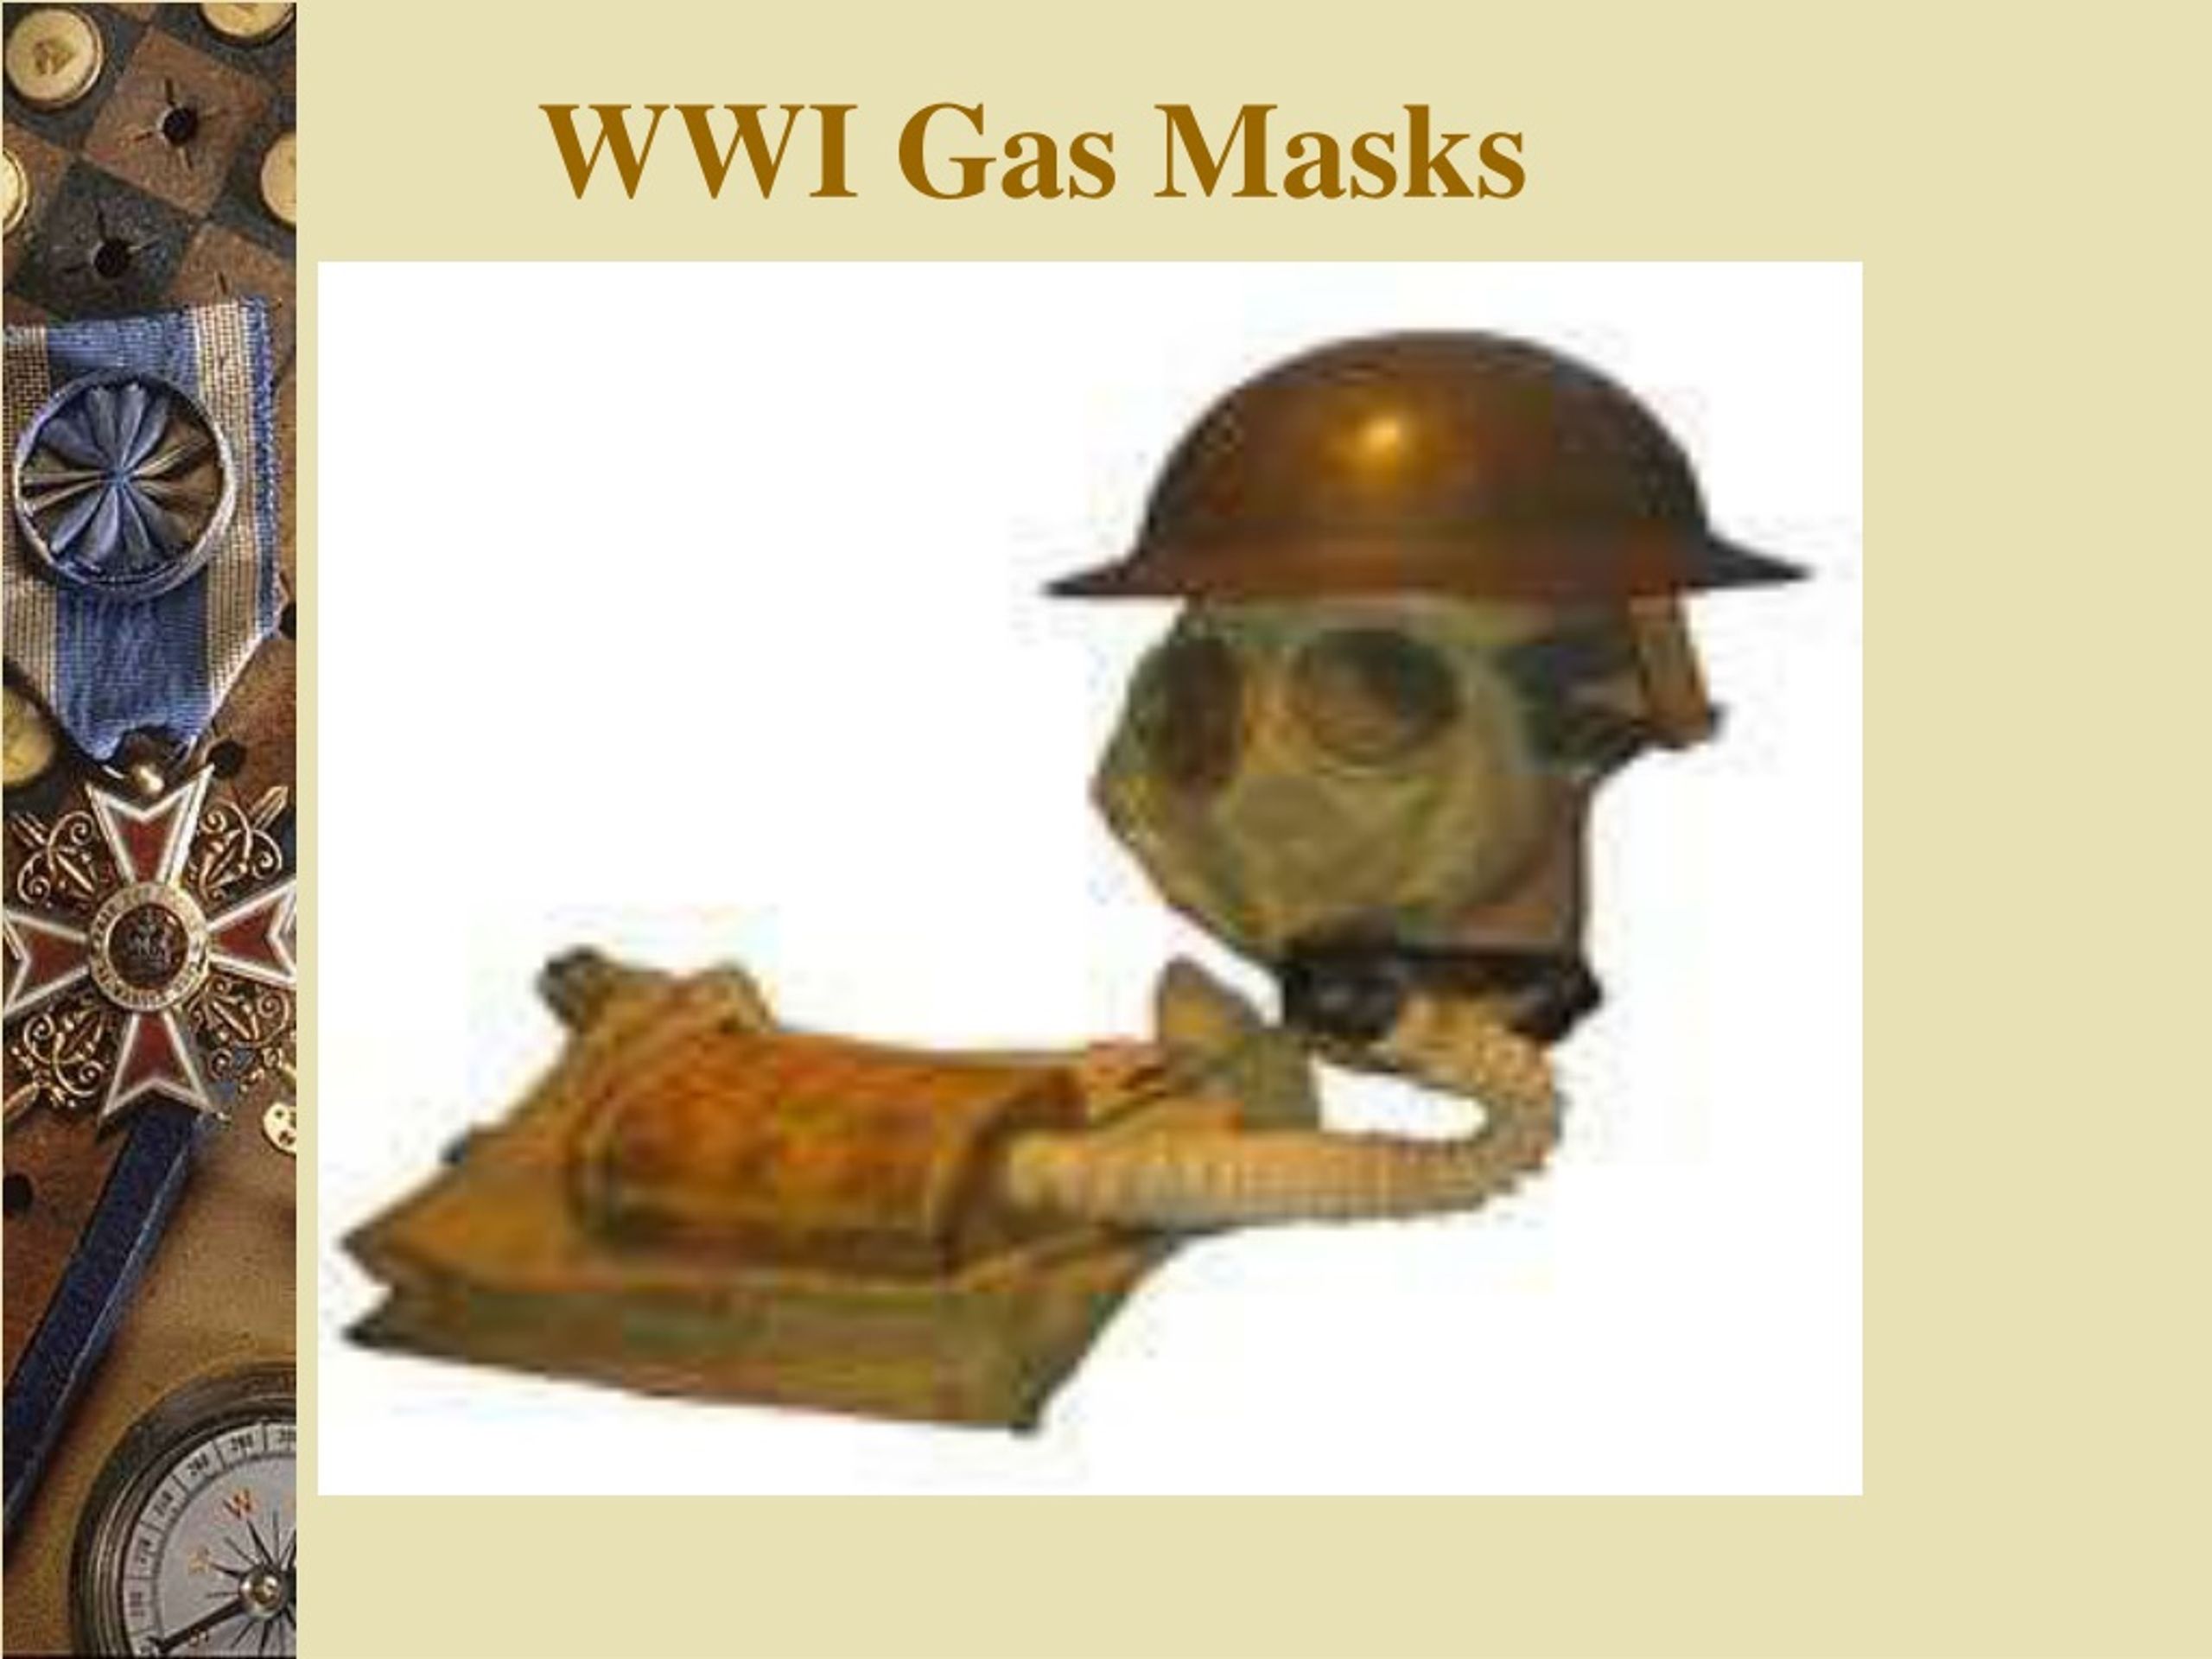 wwi gas mask logo